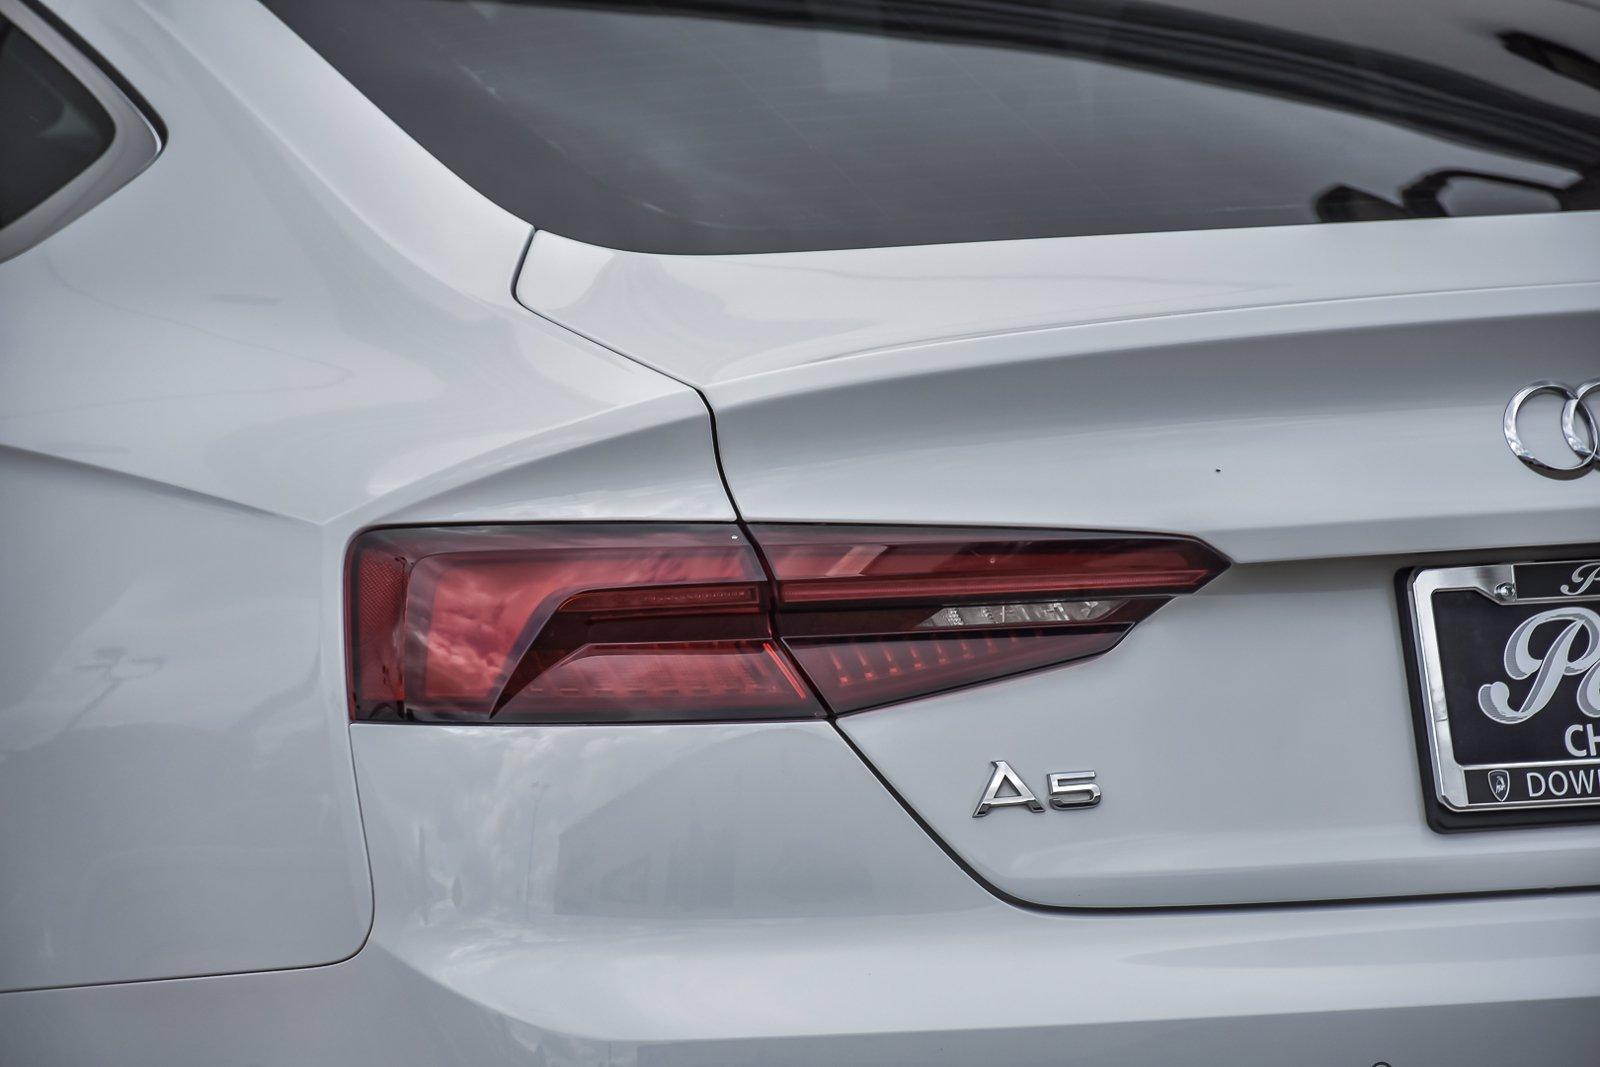 2018 Audi A5 Sportback has breakthrough design